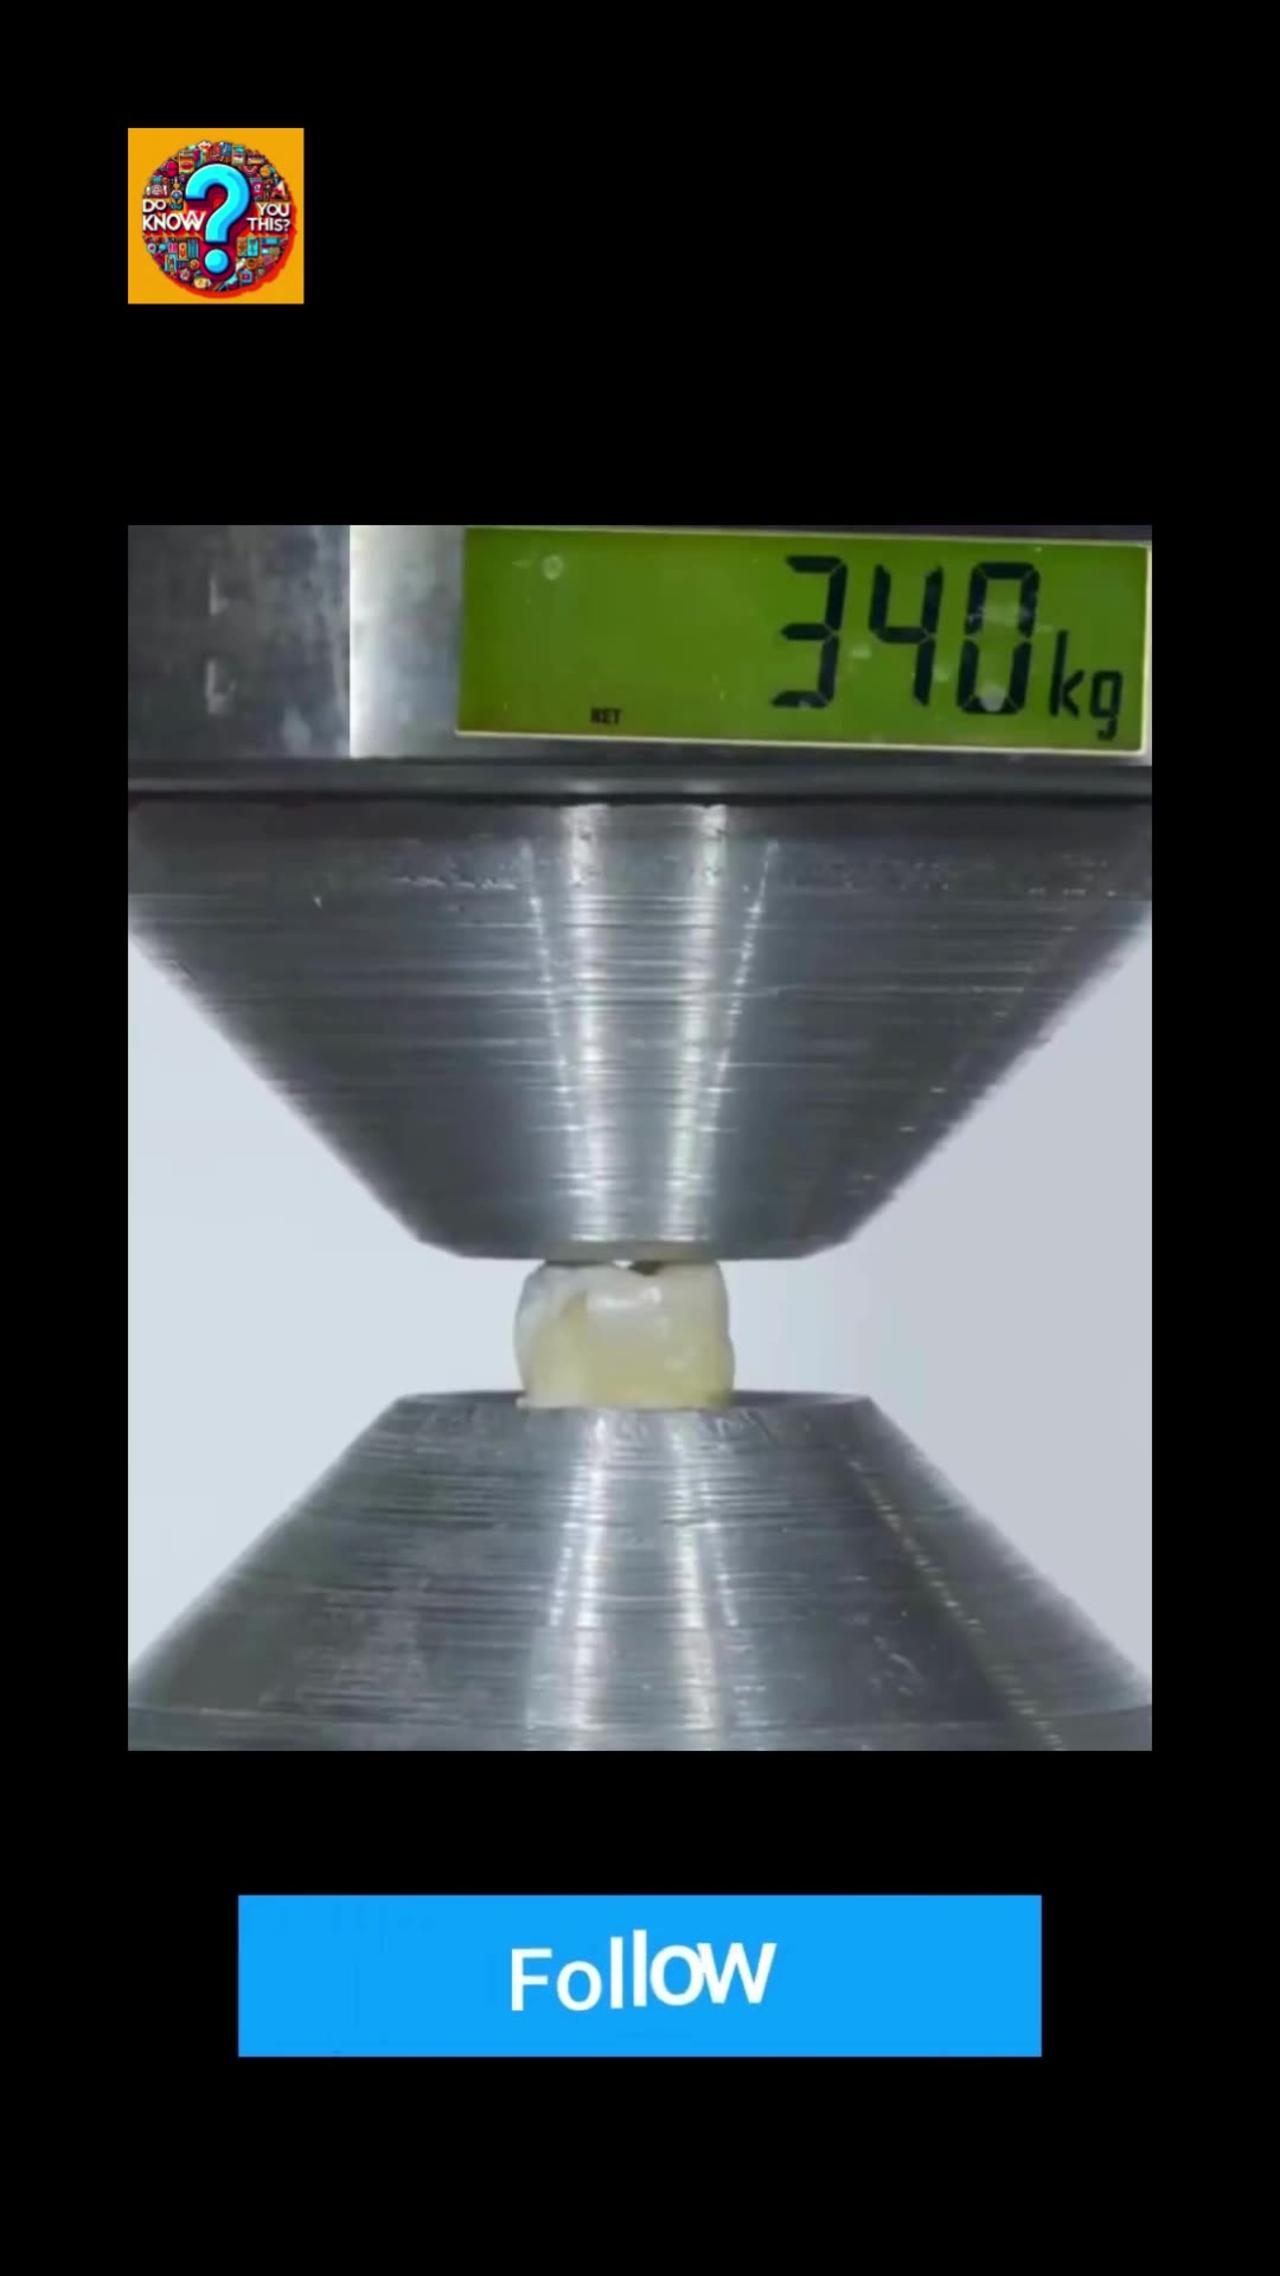 Hydraulic Press vs. Tooth